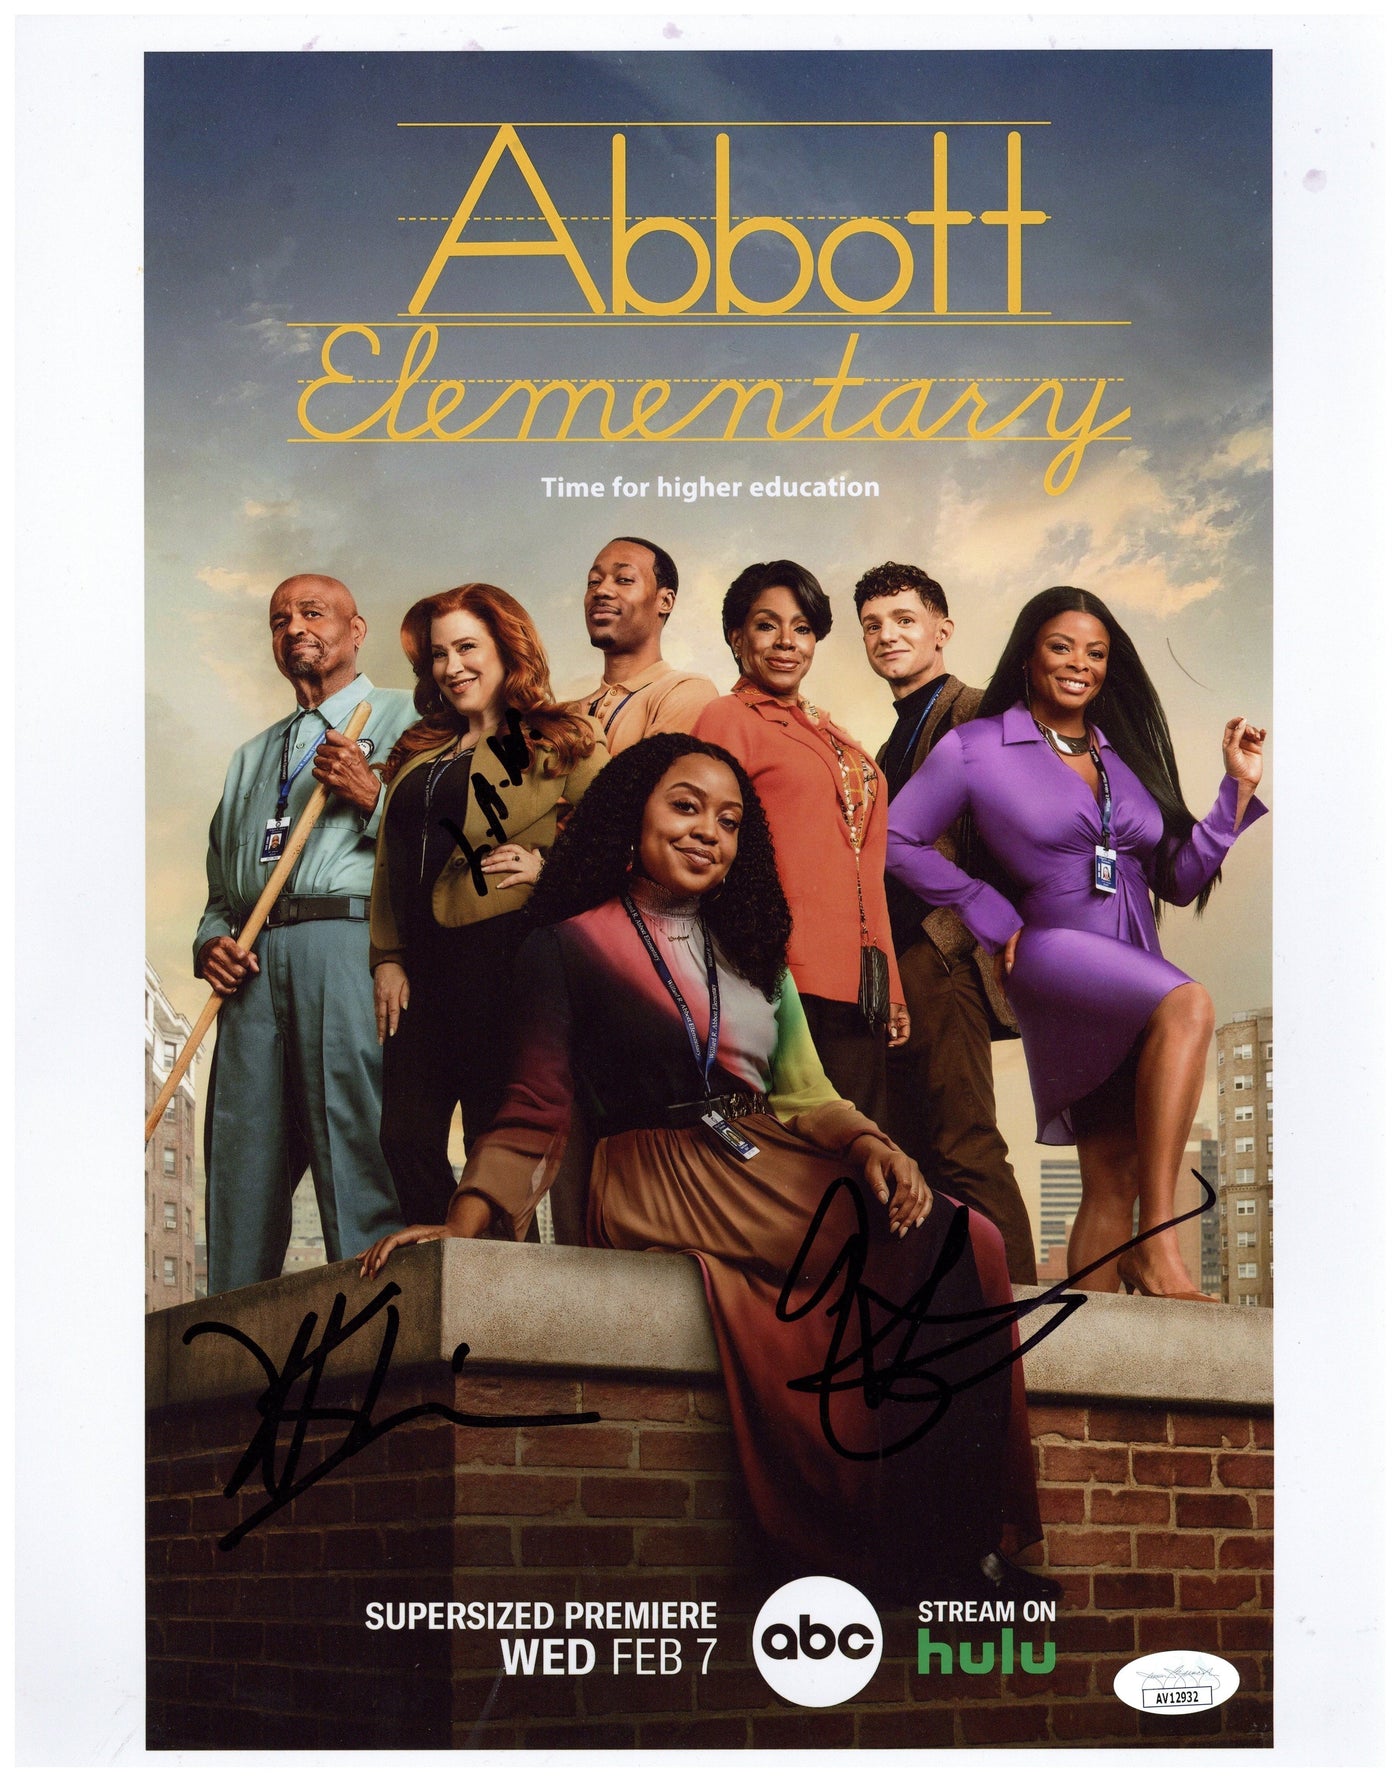 Abbott Elementary Cast Signed 11x14 Photo Autographed JSA COA